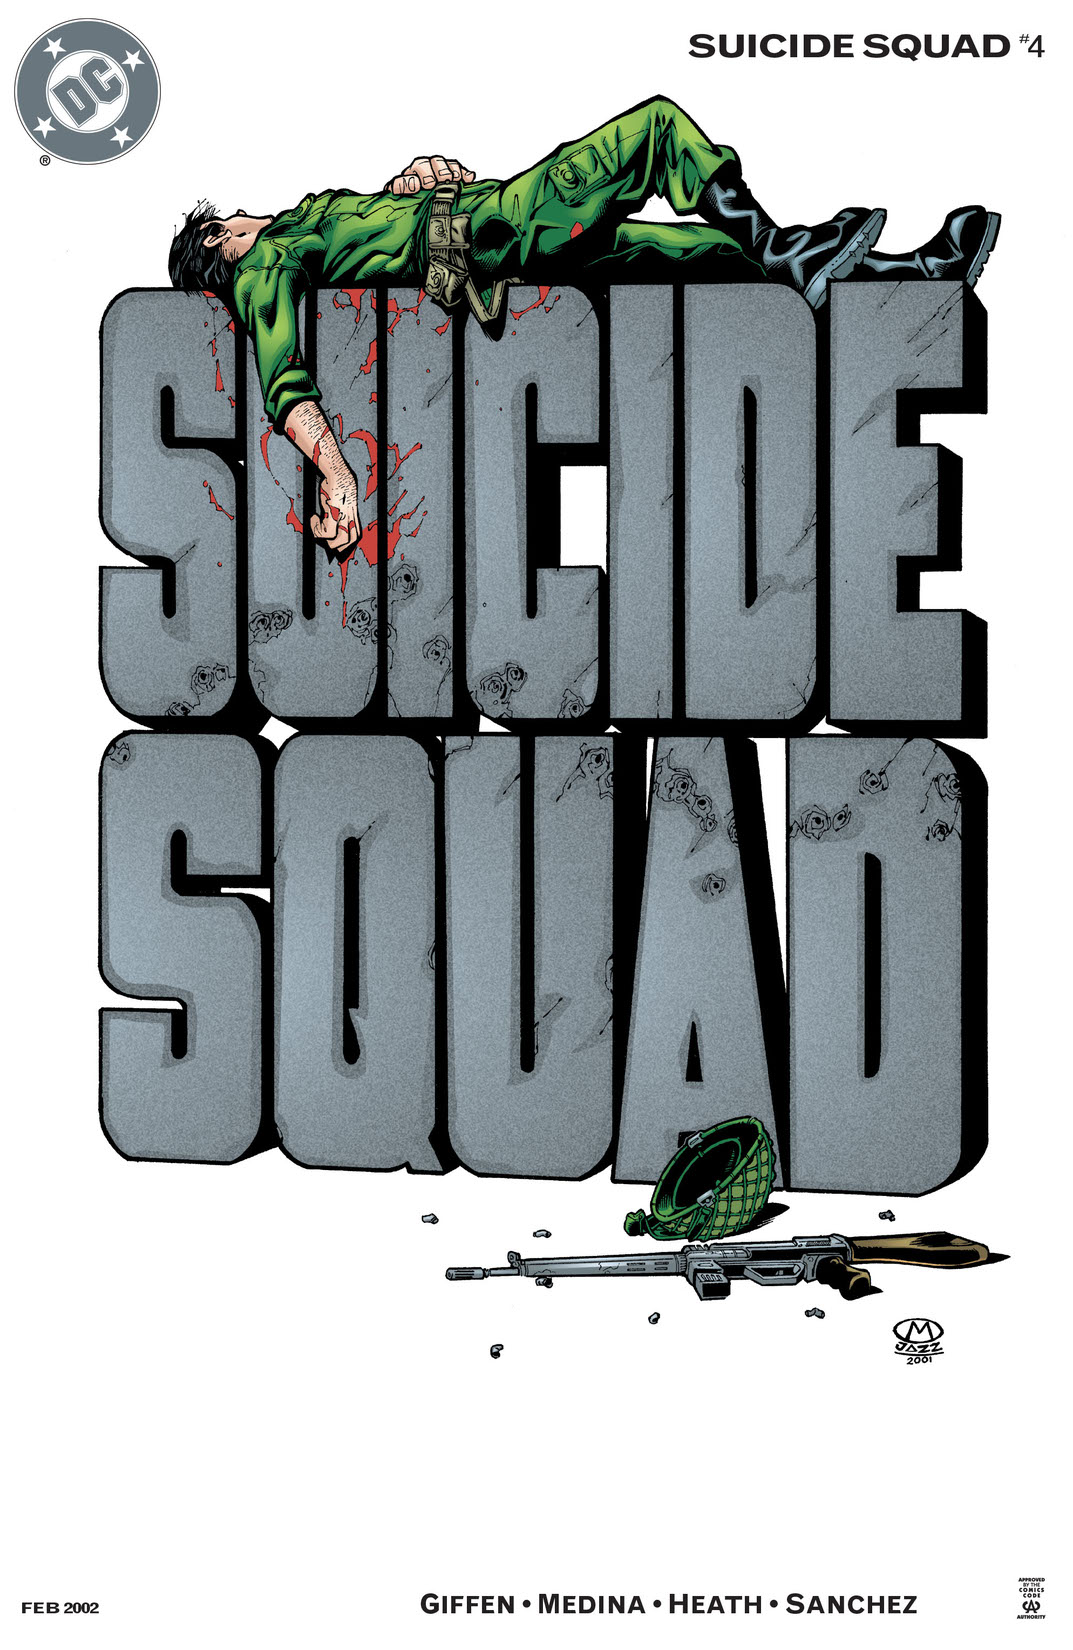 Suicide Squad (2001-) #4 preview images